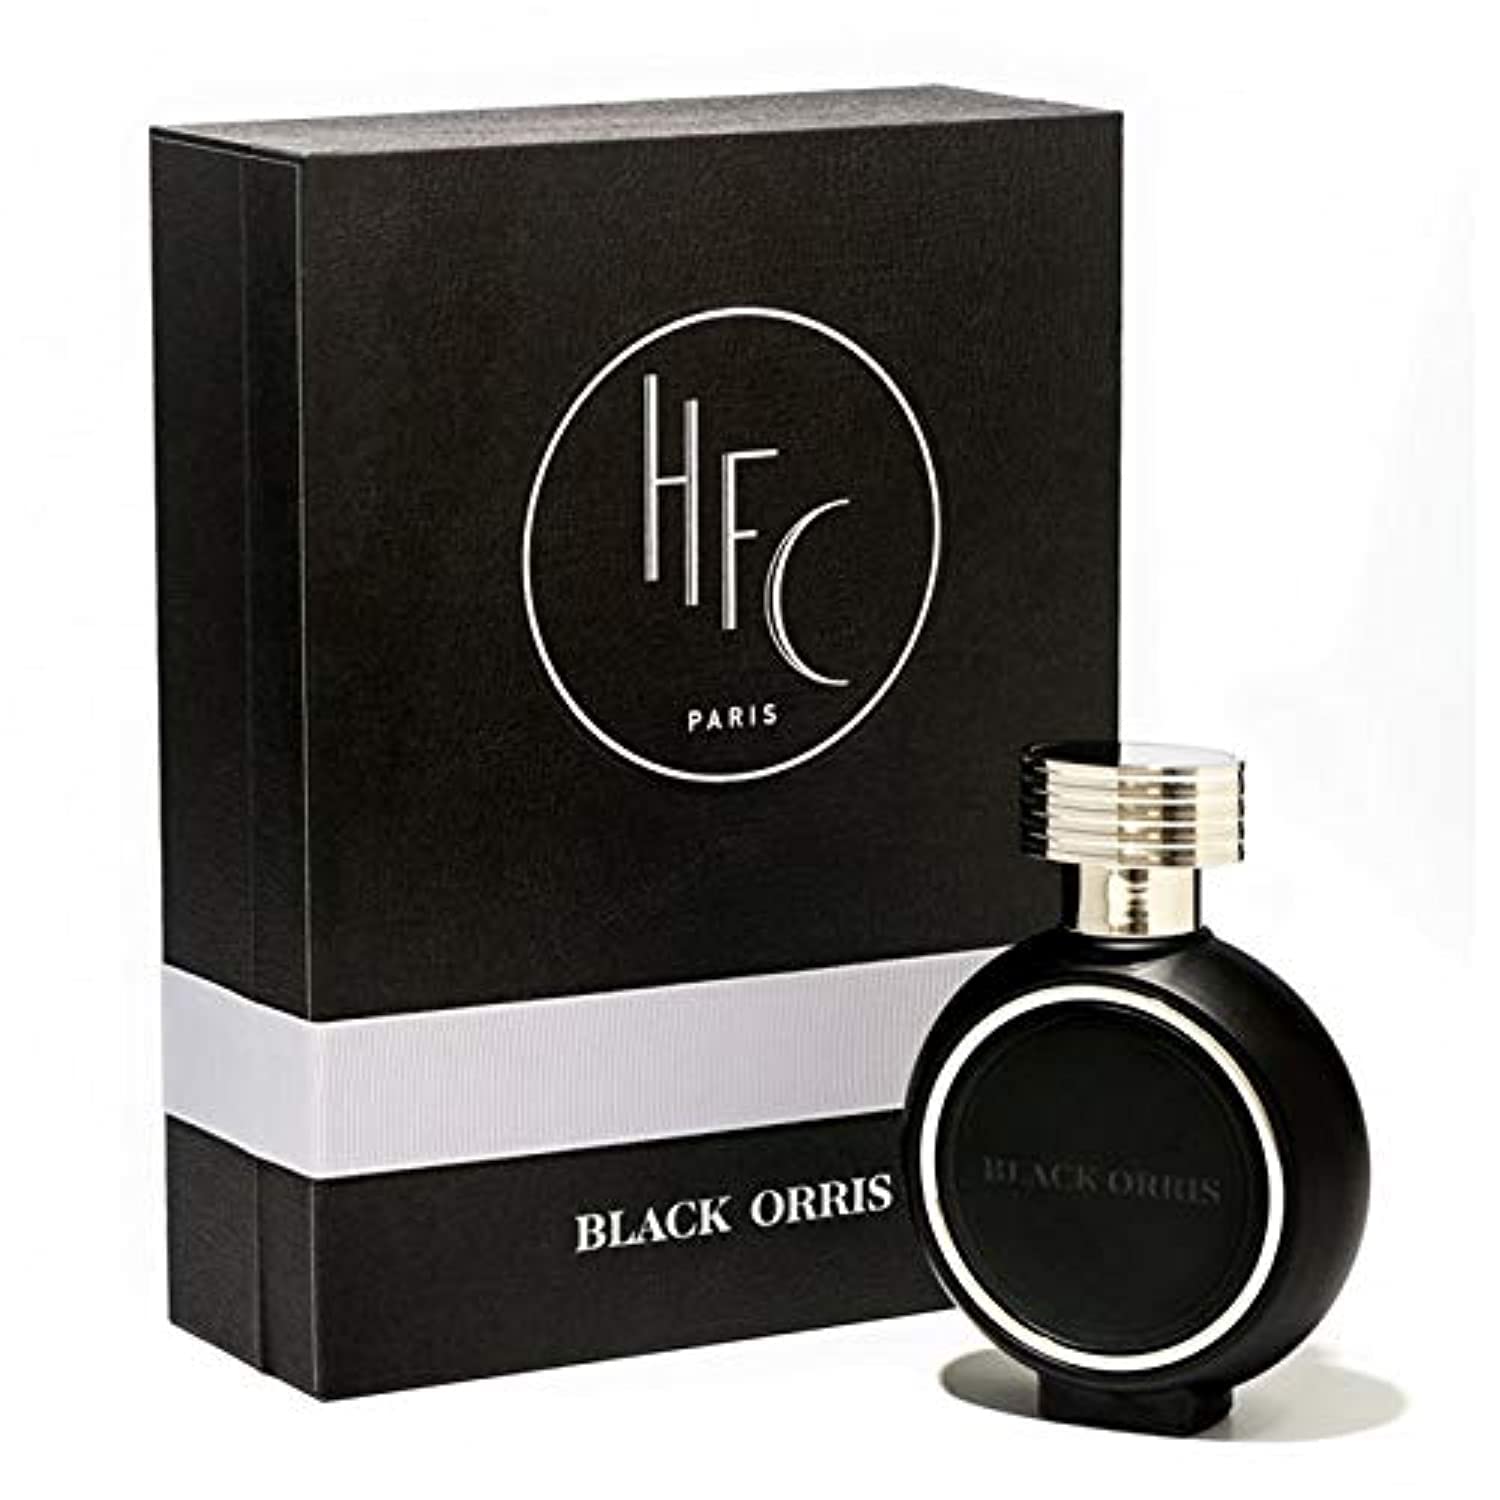 HFC Black Orris EDP | My Perfume Shop Australia